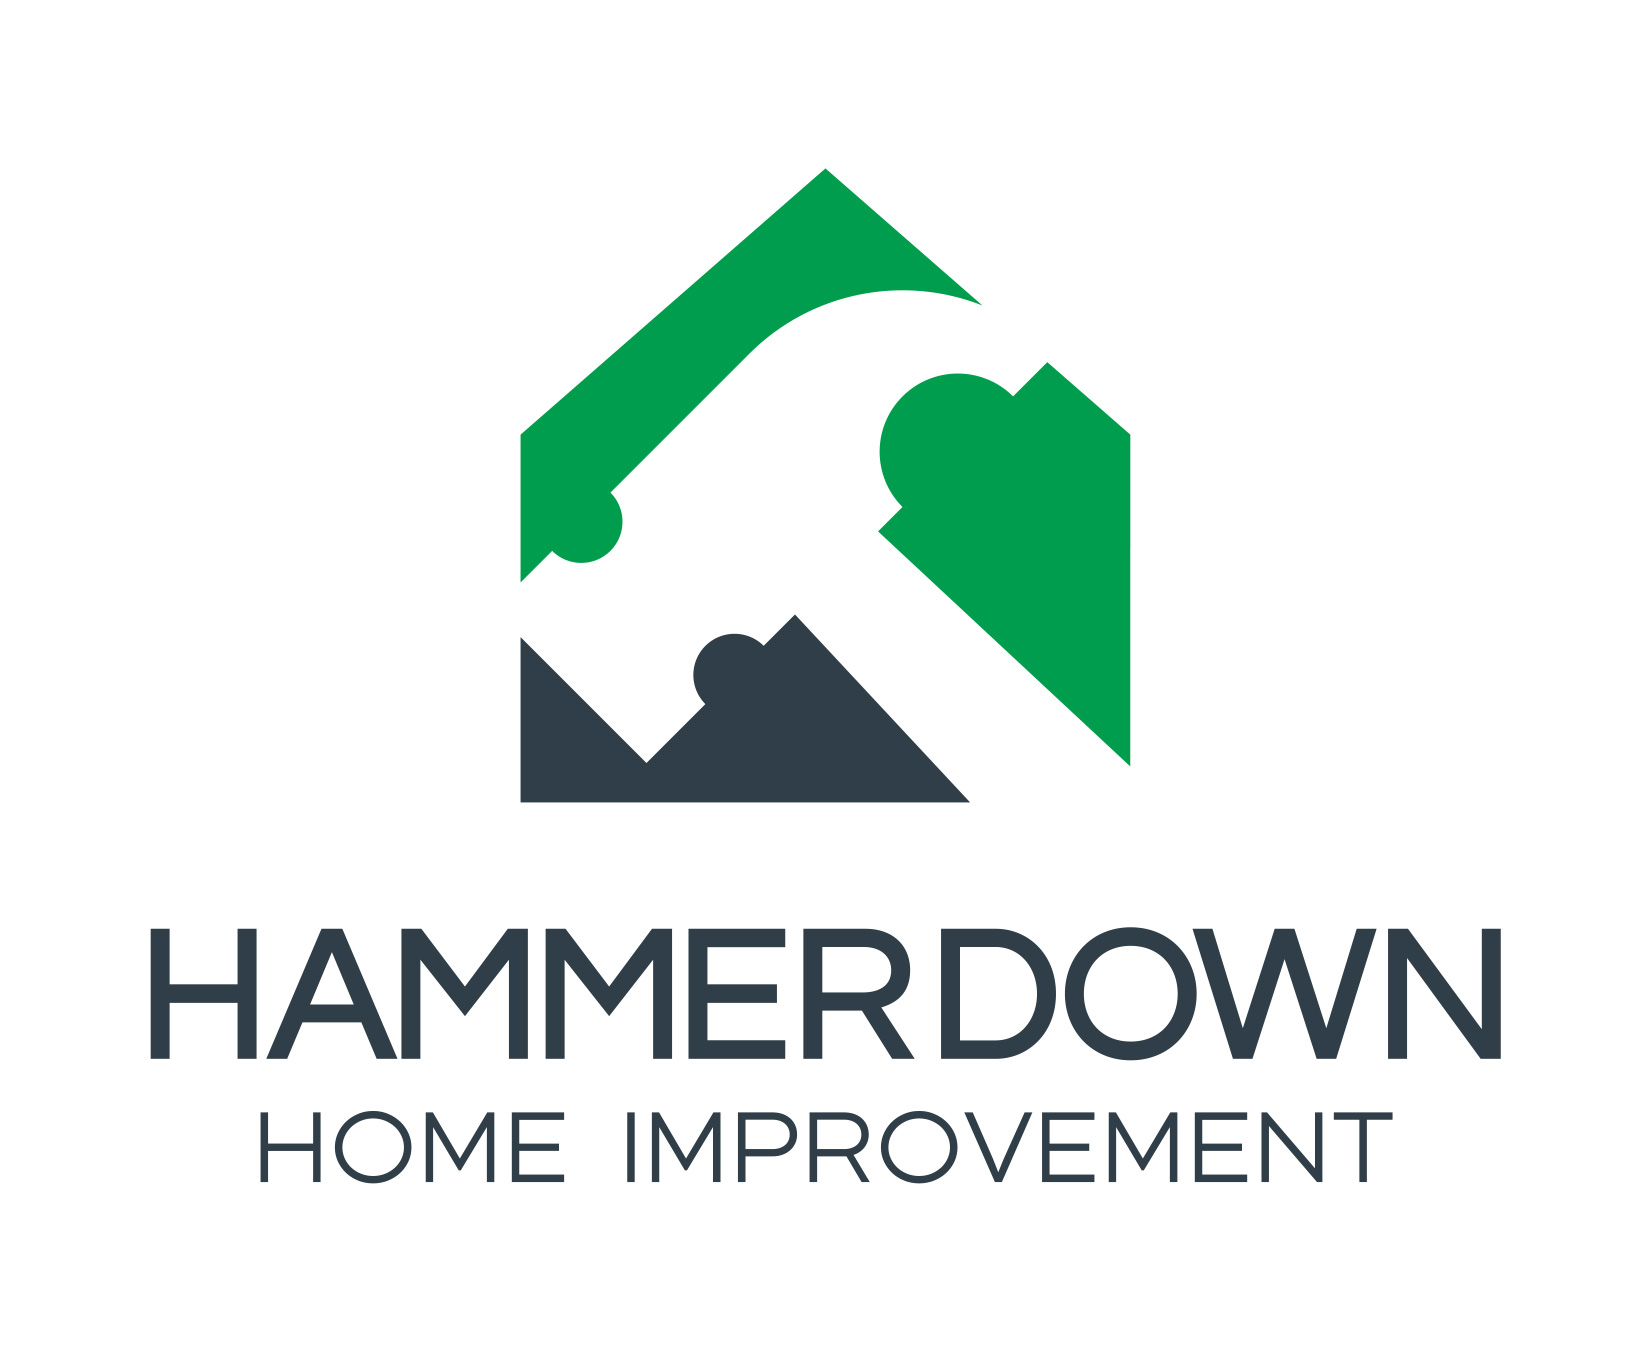 HammerDown Home Improvement | Serving Durham Region and Surrounding Area